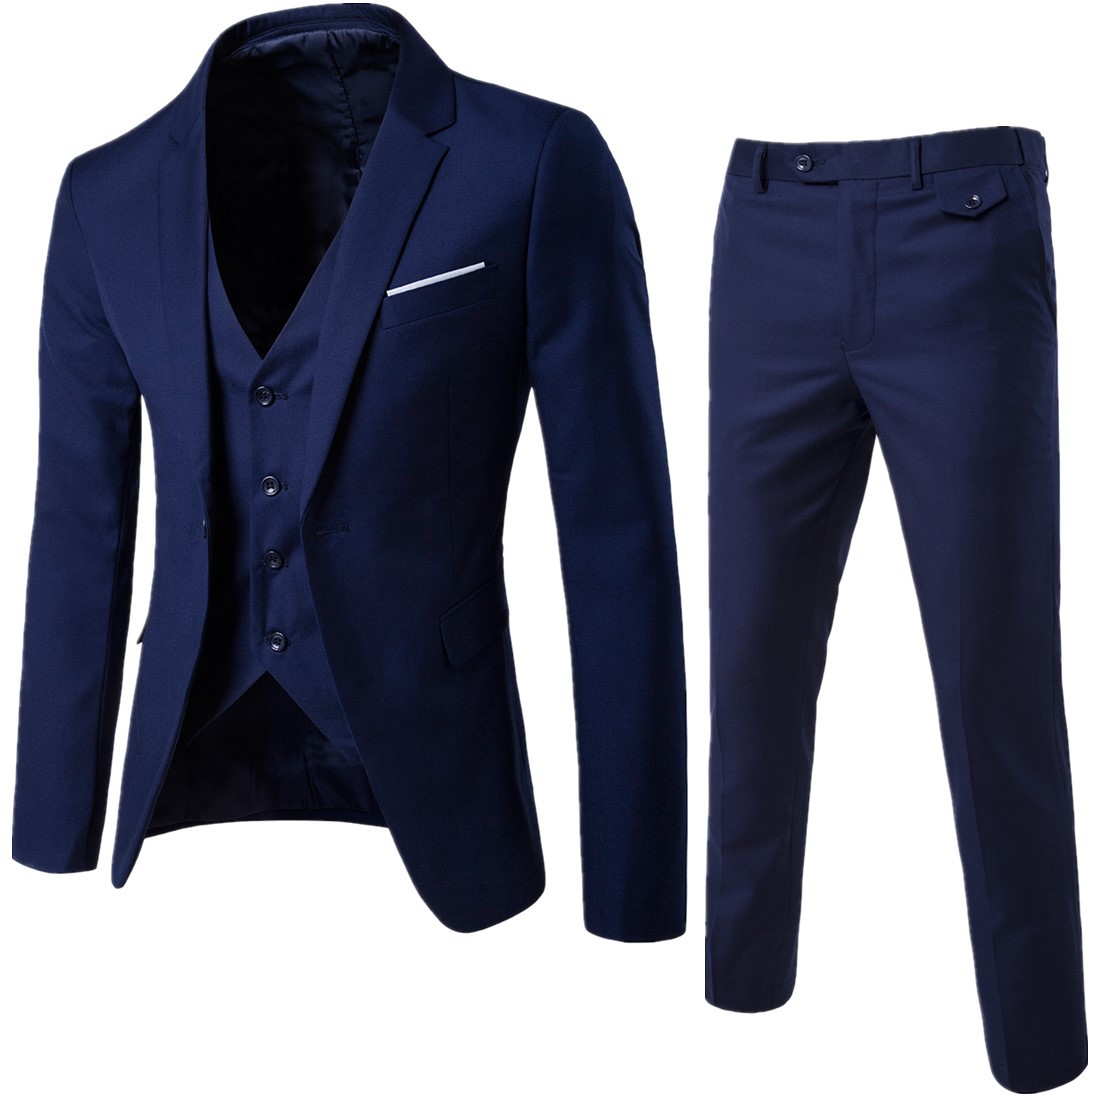 2020 spring new men's business solid color suit white collar best man work suit three piece men's wholesale